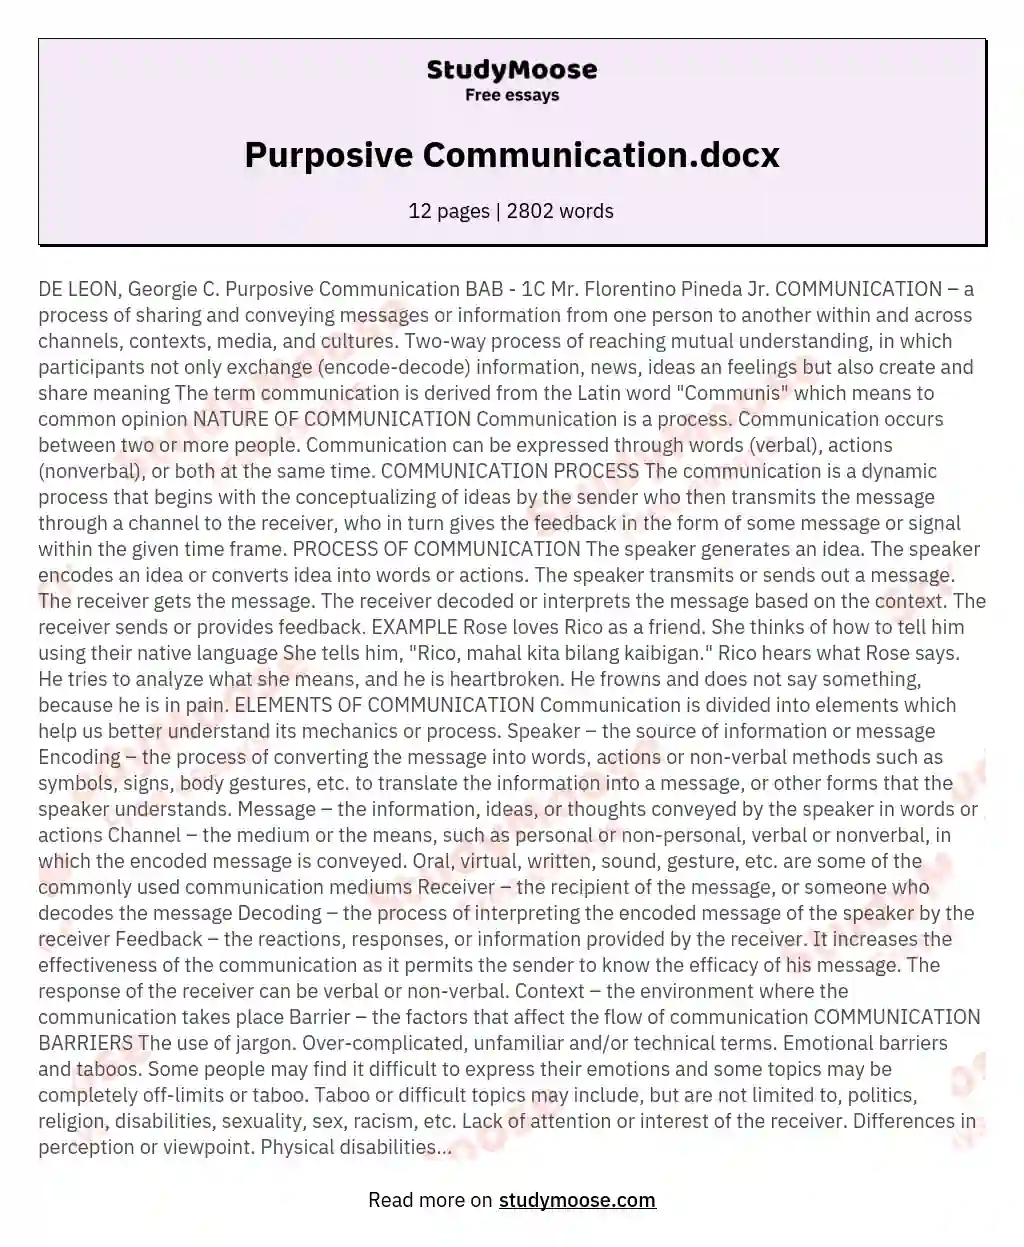 Purposive Communication.docx essay